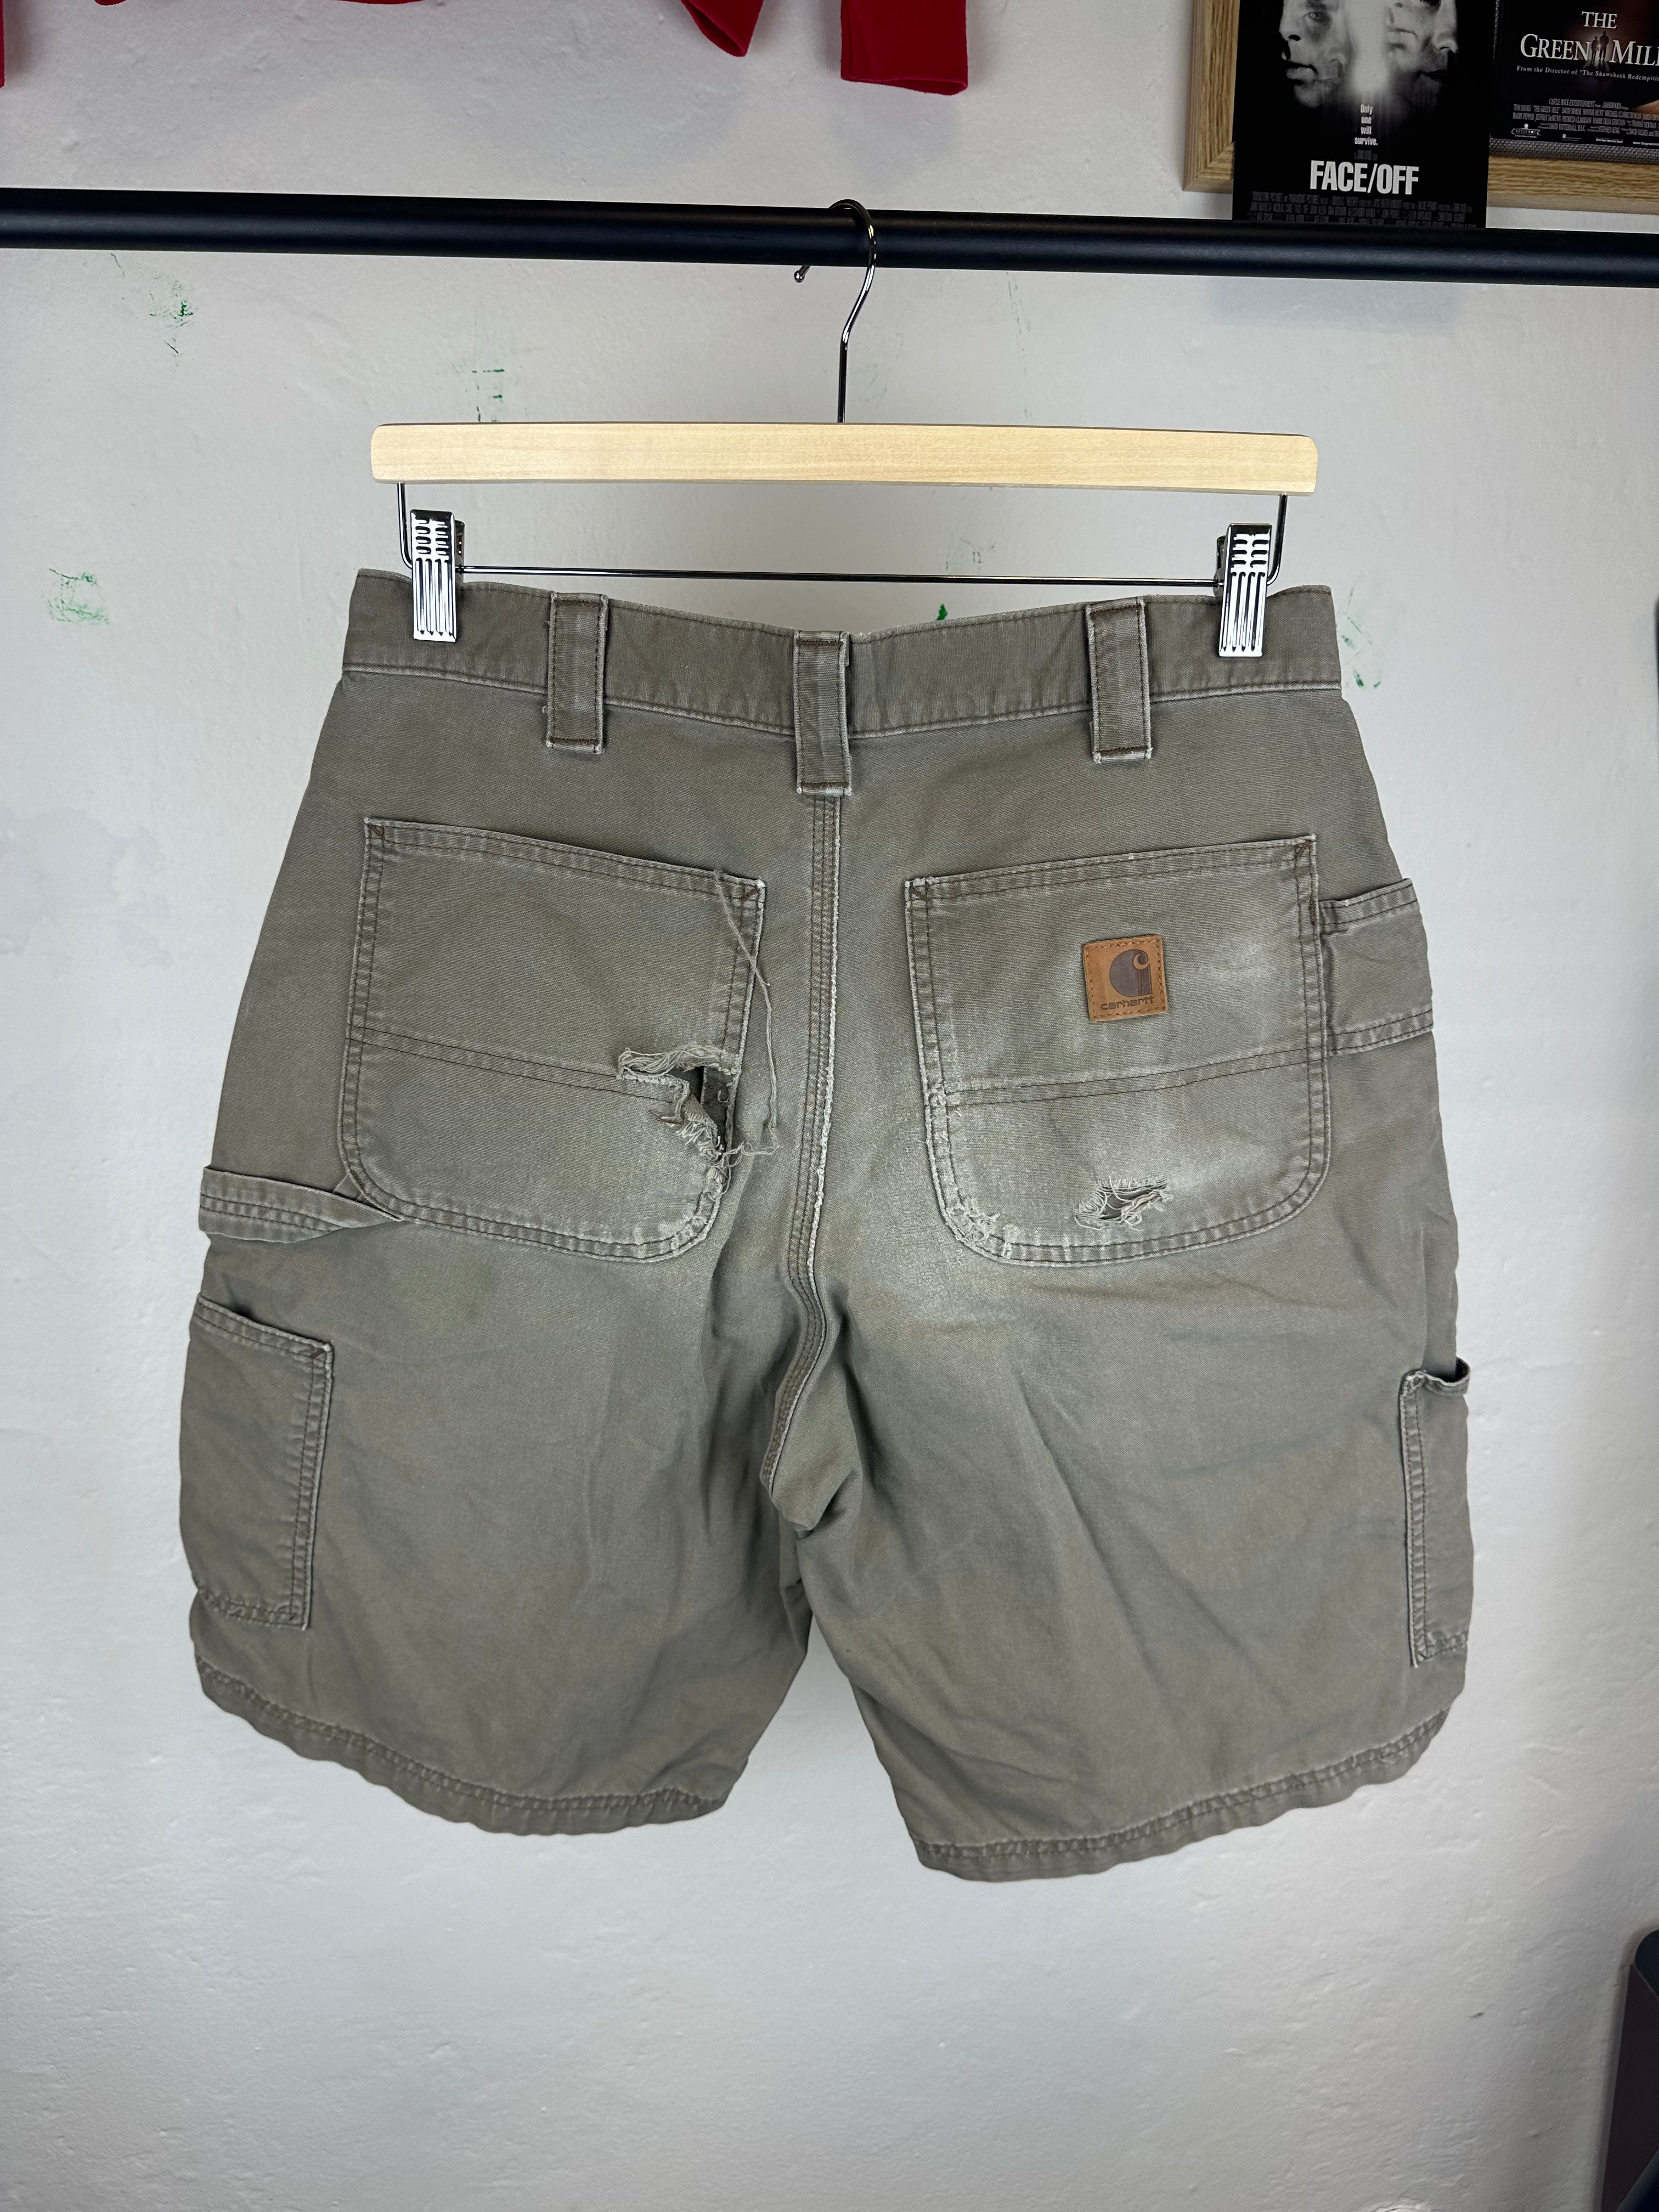 Vintage Carhartt Distressed Shorts - size 32